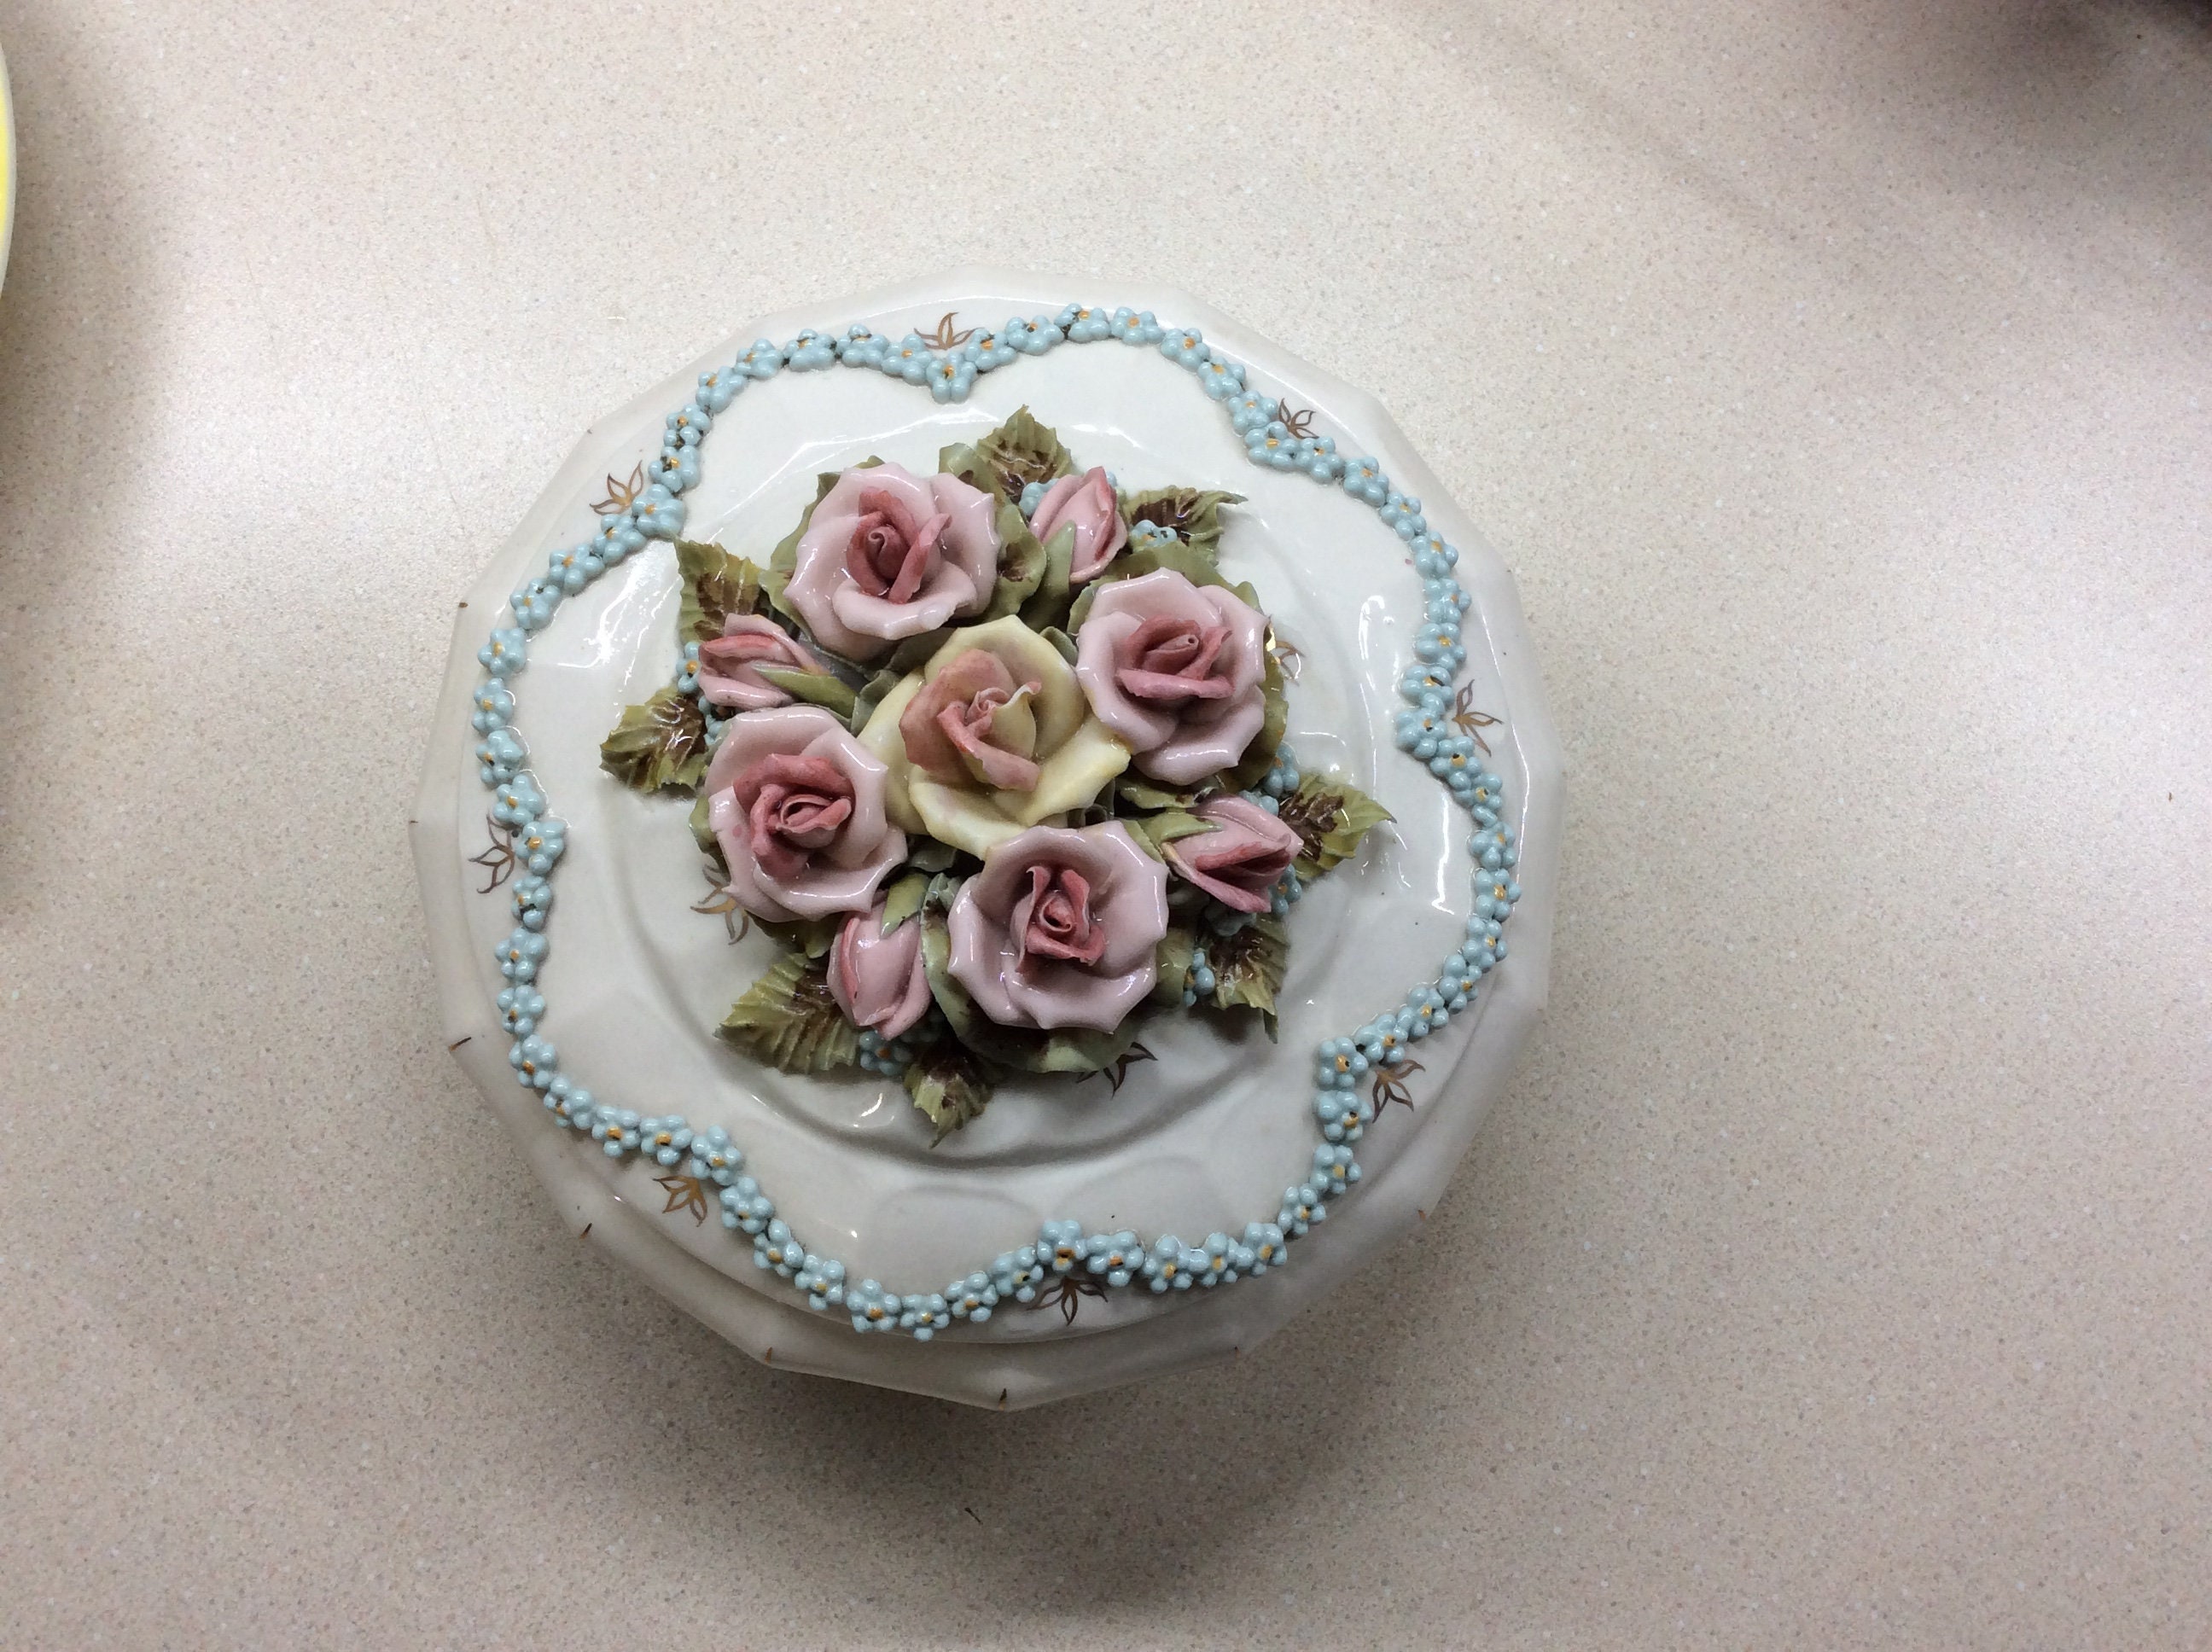 Rare Italian Lidded Icing-like Porcelain Roses Collectors Bowl